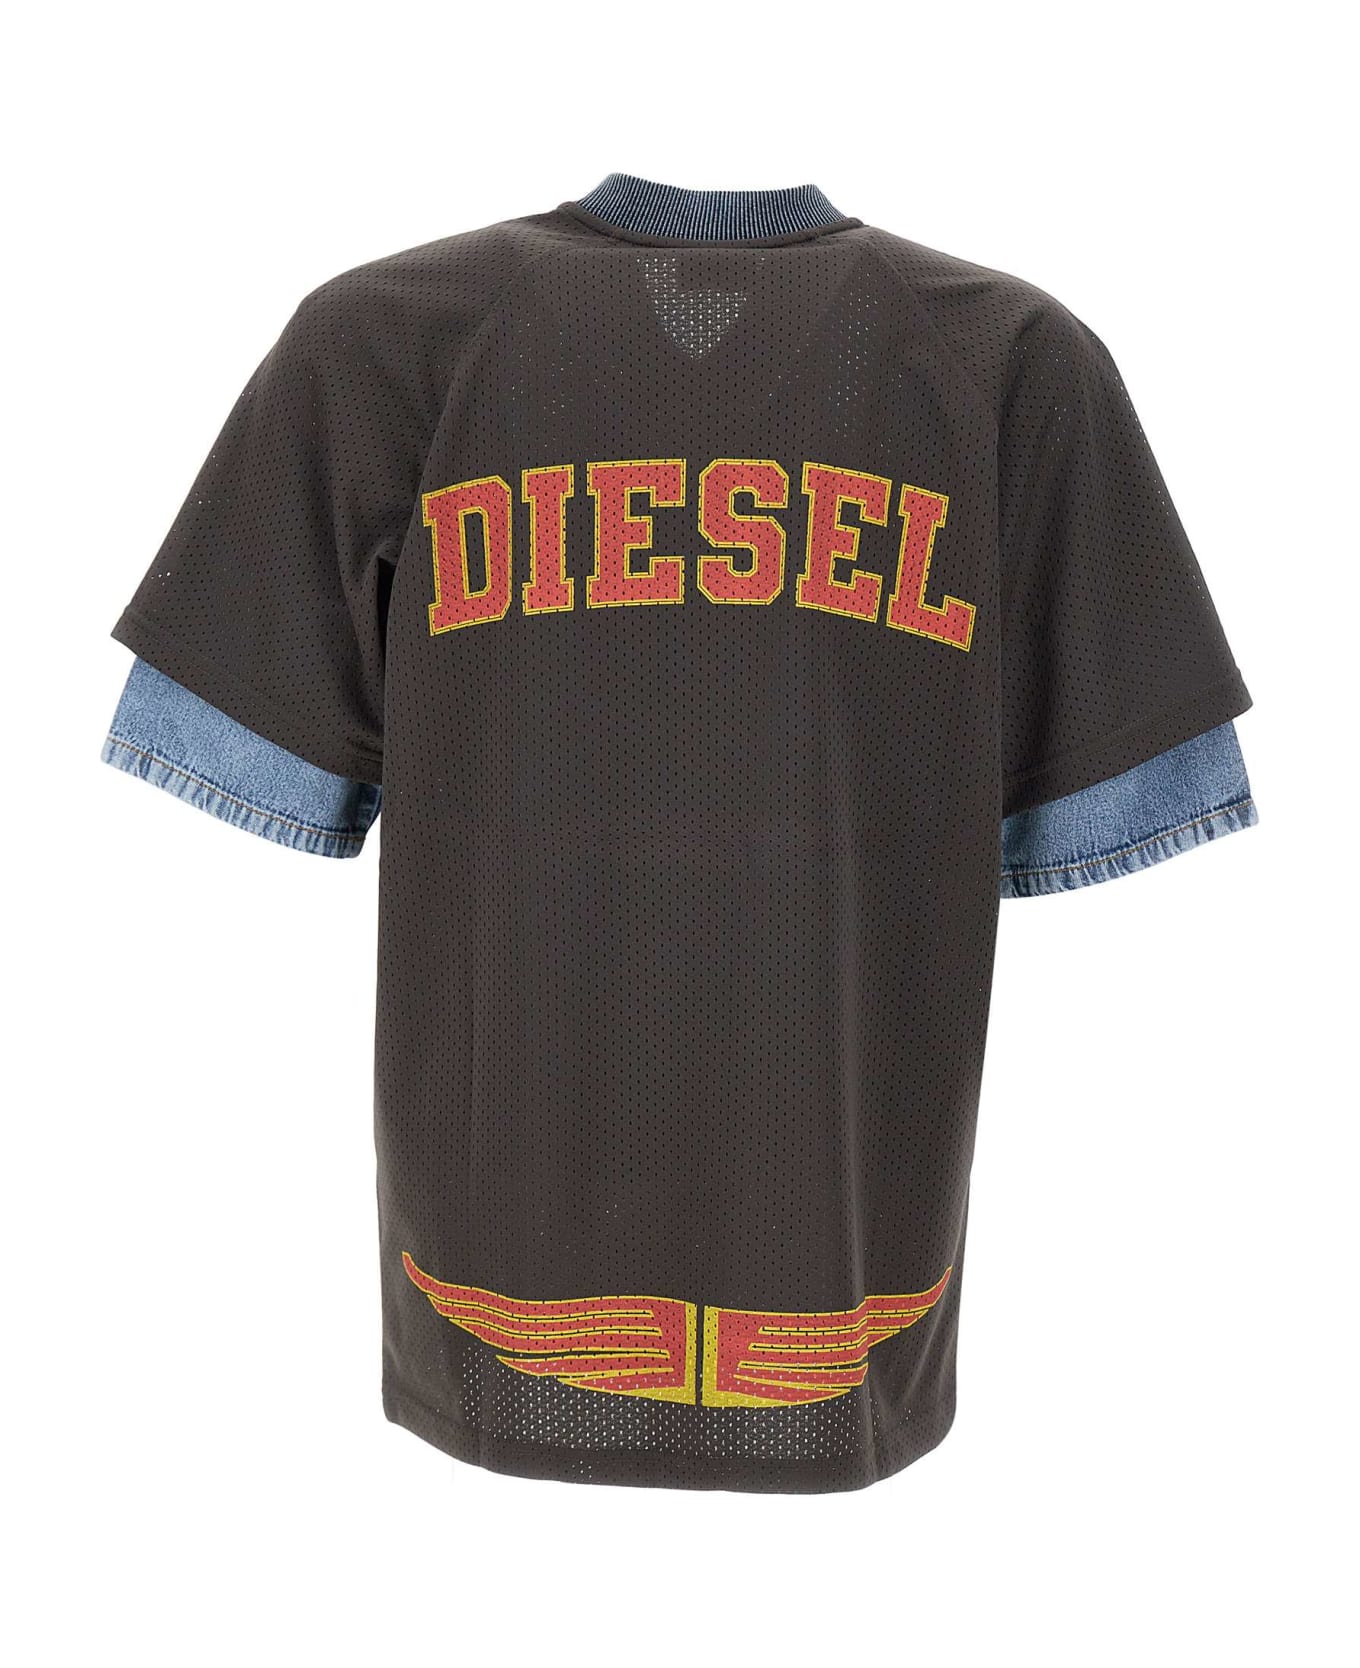 Diesel 't-voxt' T-shirt - Charcoal/grey